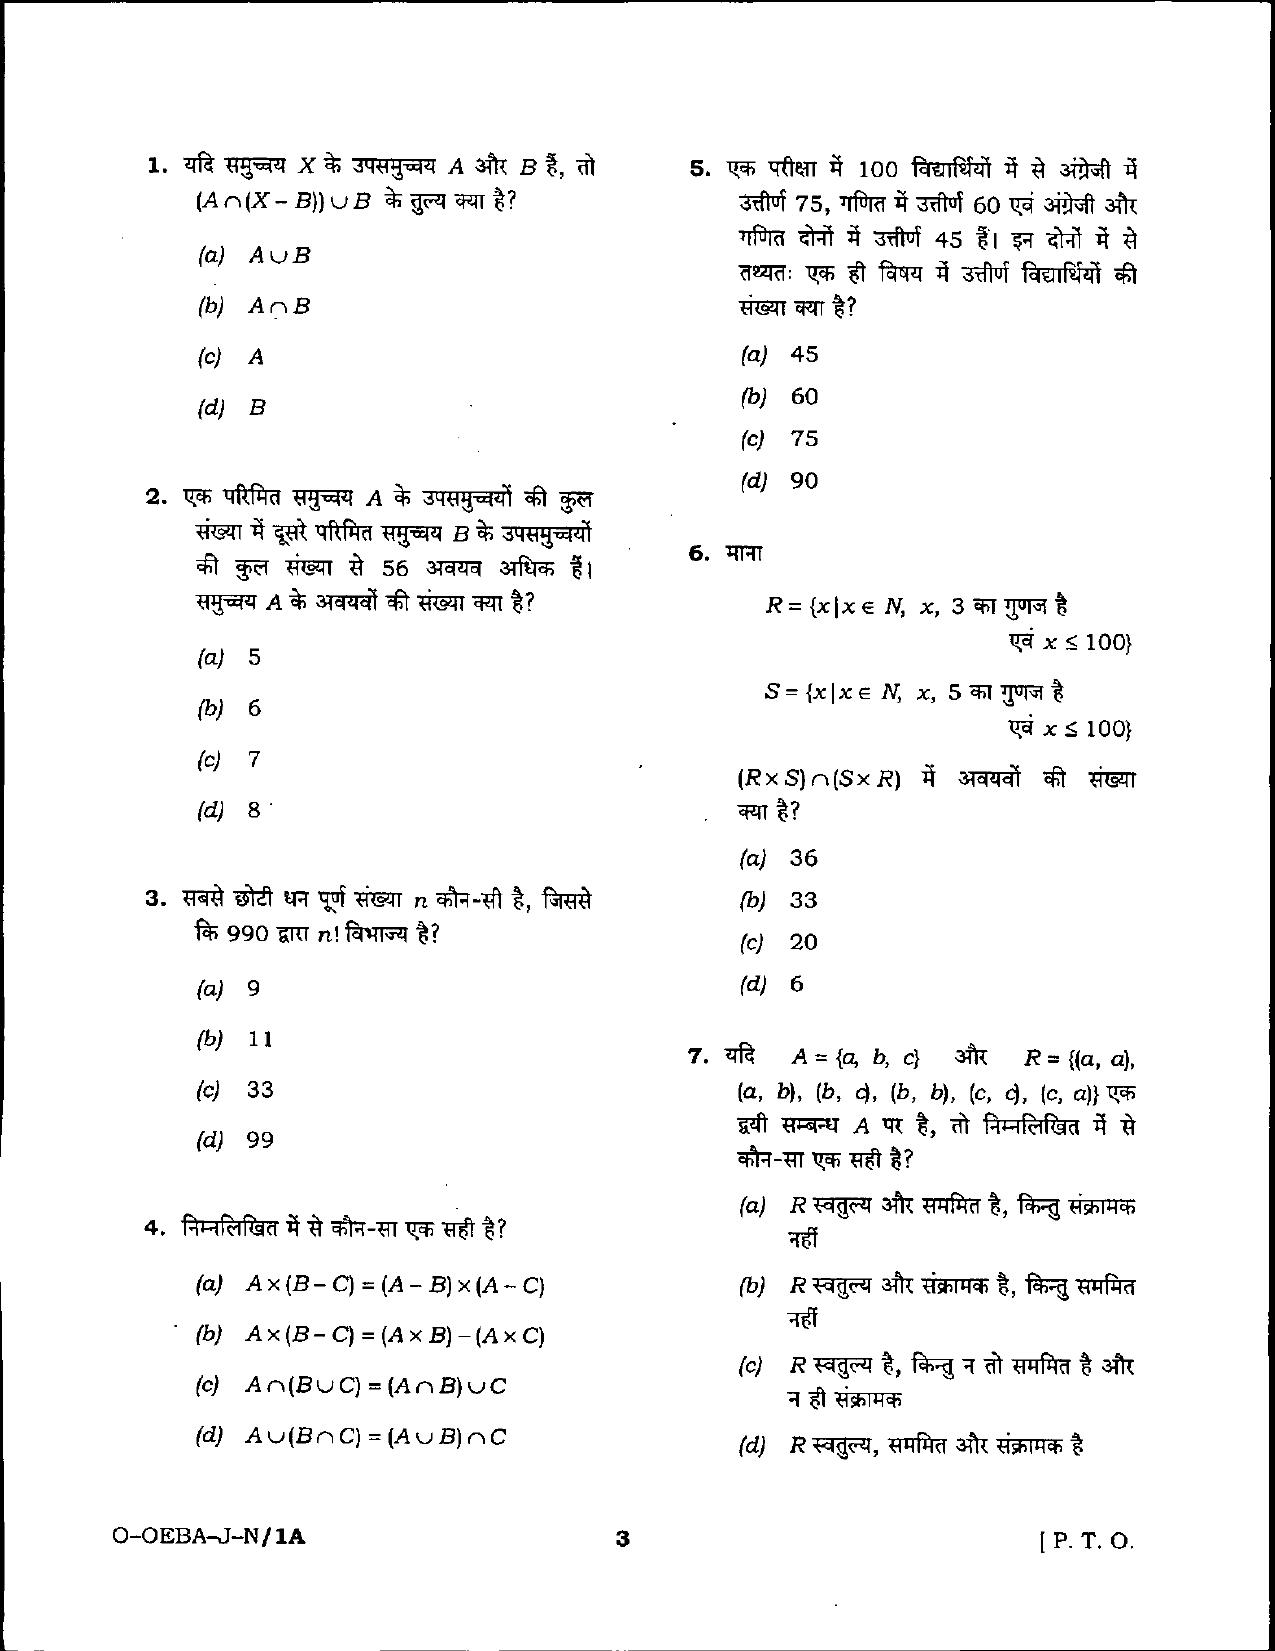 Odisha Junior Clerk Question Paper - General Mathematics - Page 3